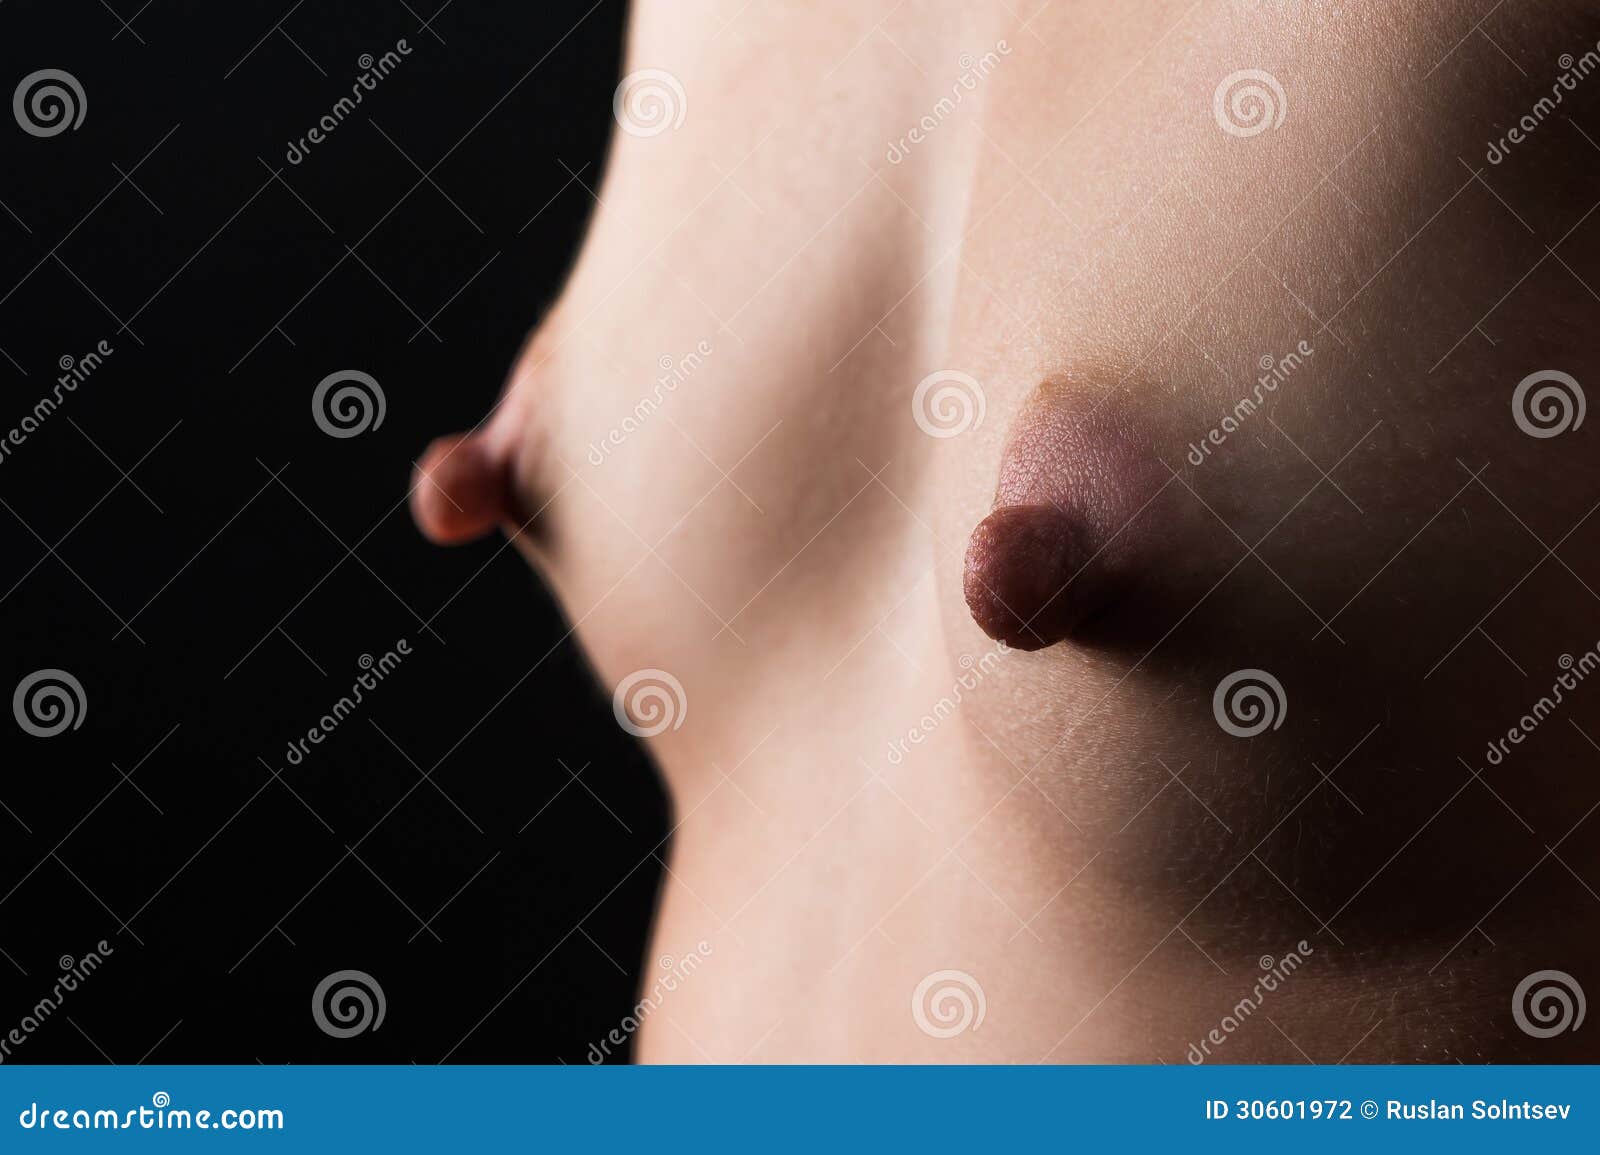 Small Tits Large Nipples